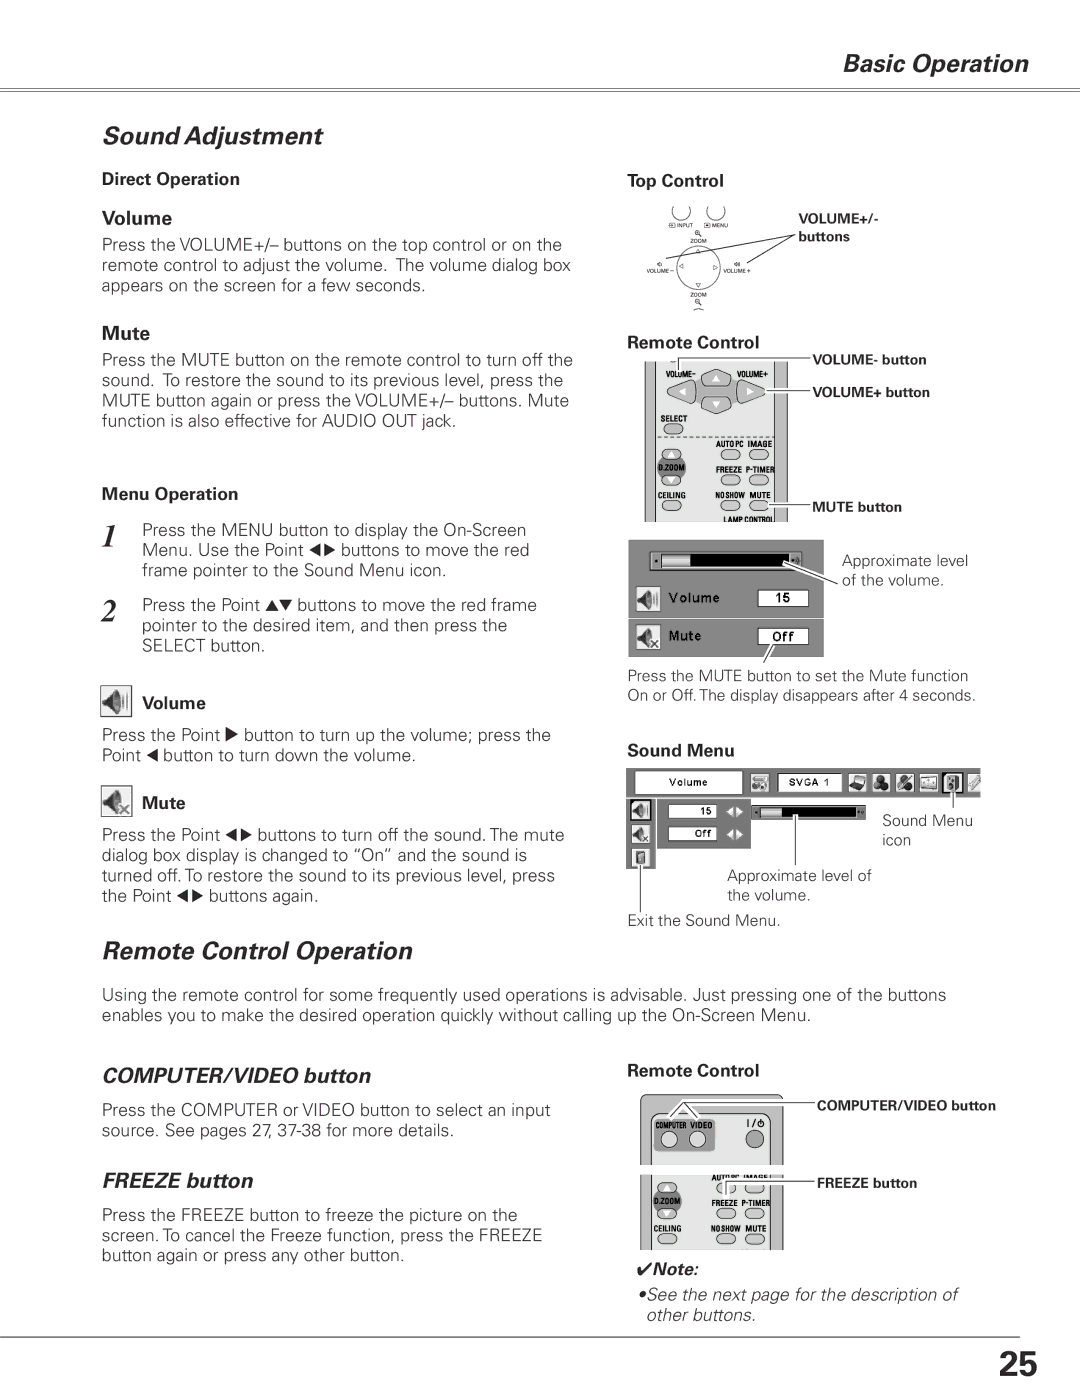 Sanyo PLC-XL50 Basic Operation Sound Adjustment, Remote Control Operation, COMPUTER/VIDEO button, Freeze button 